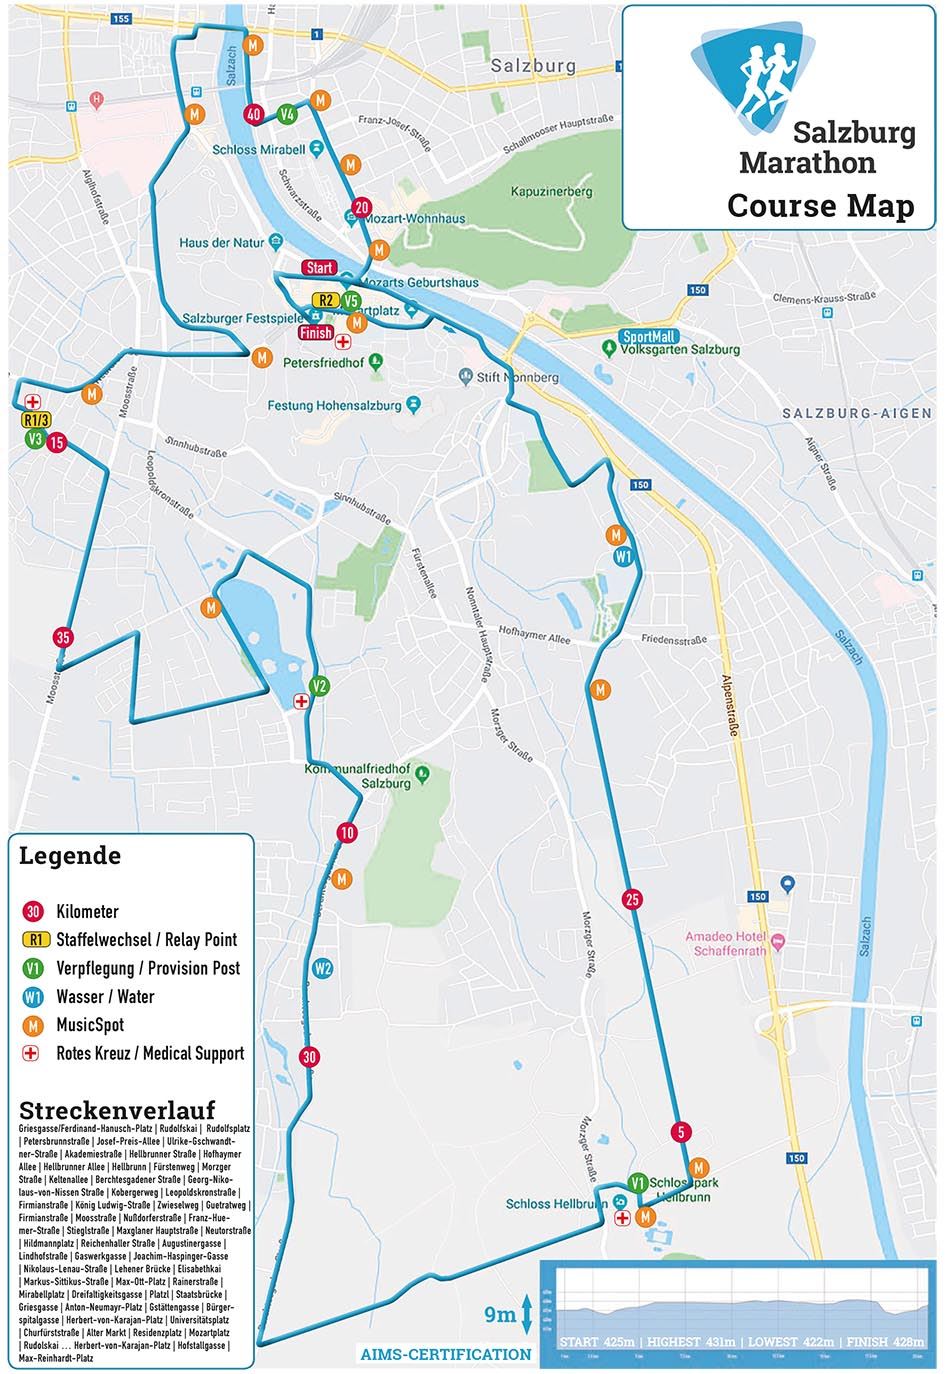 Salzburg Marathon, May 19 2019 World's Marathons